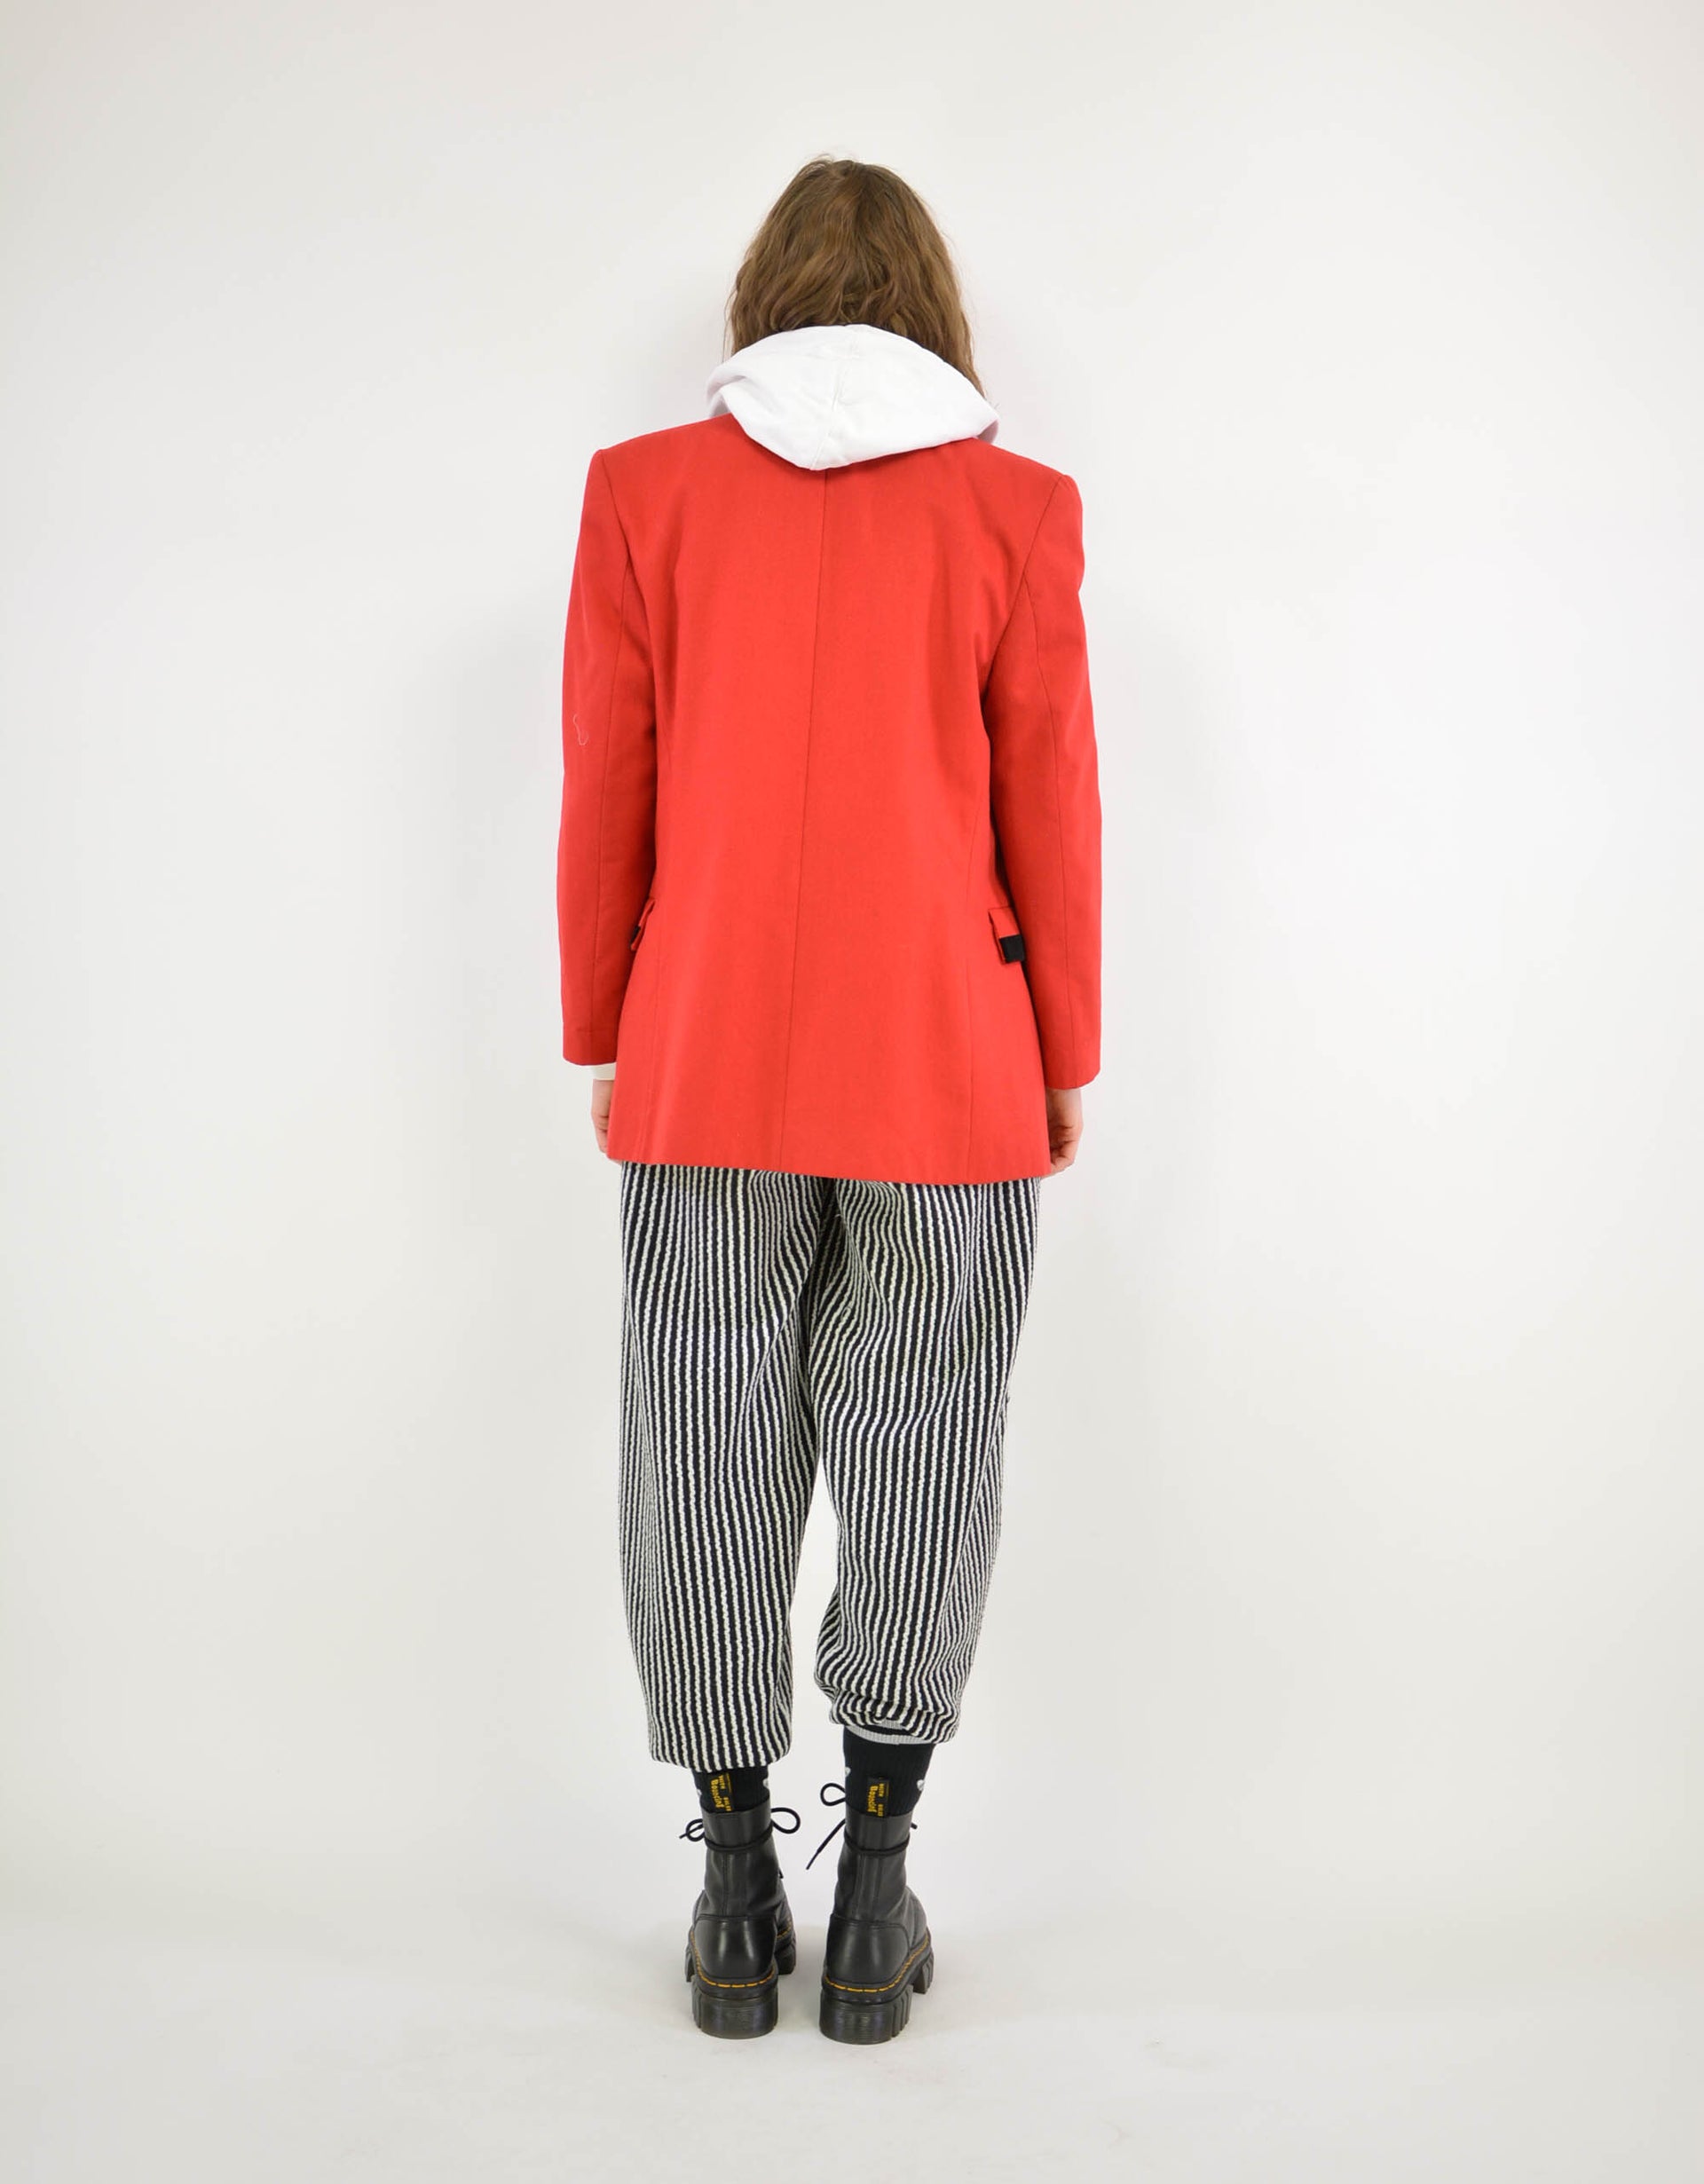 Red suit jacket - PICKNWEIGHT - VINTAGE KILO STORE